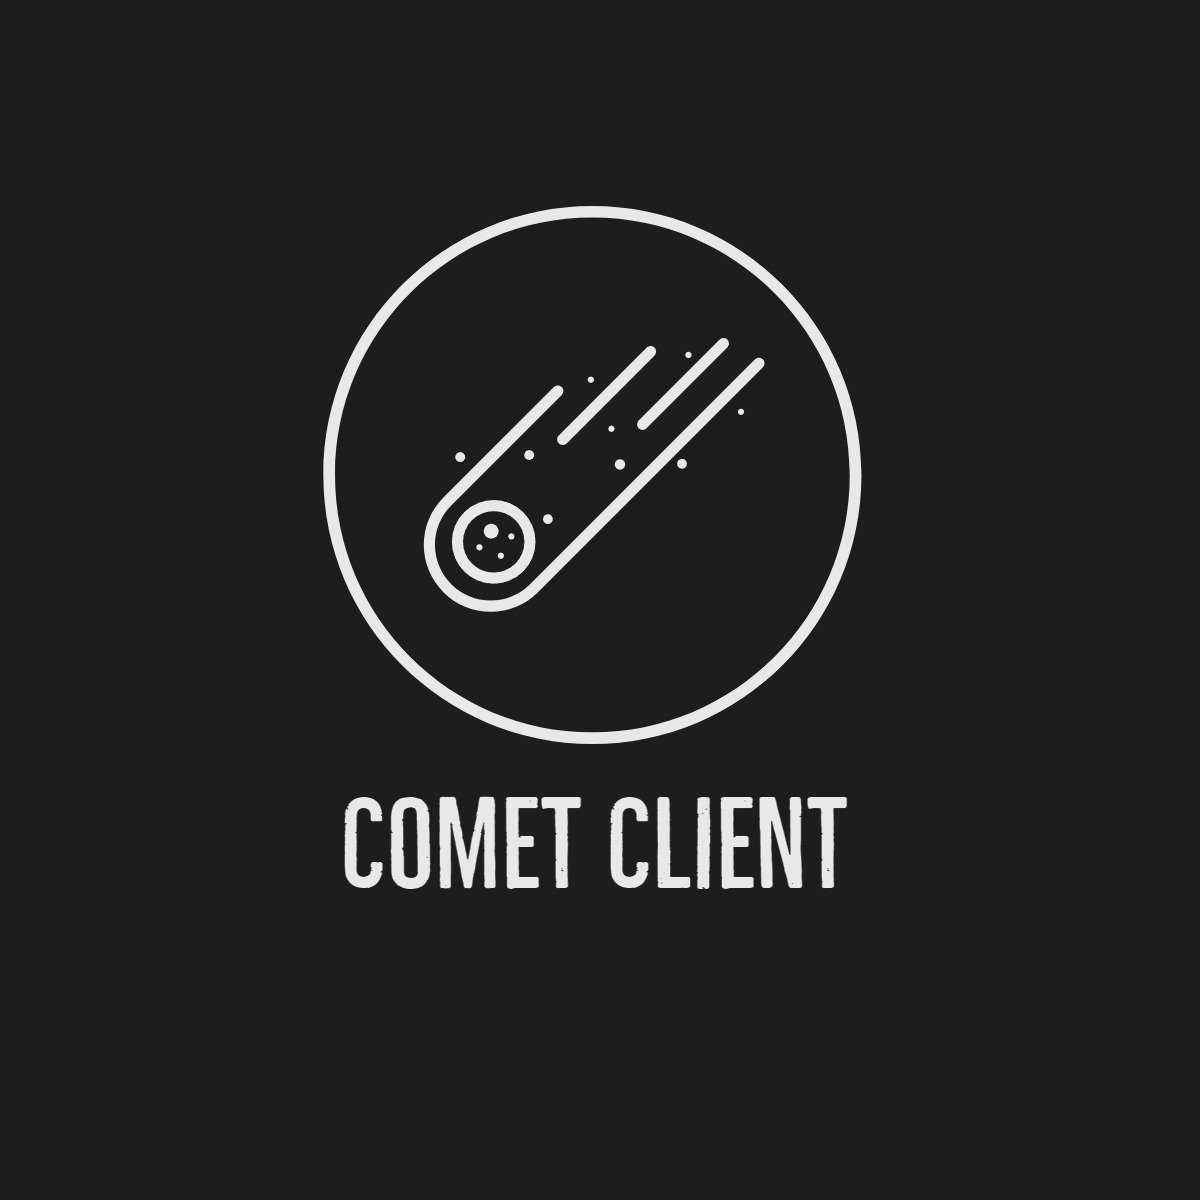 Comet Client